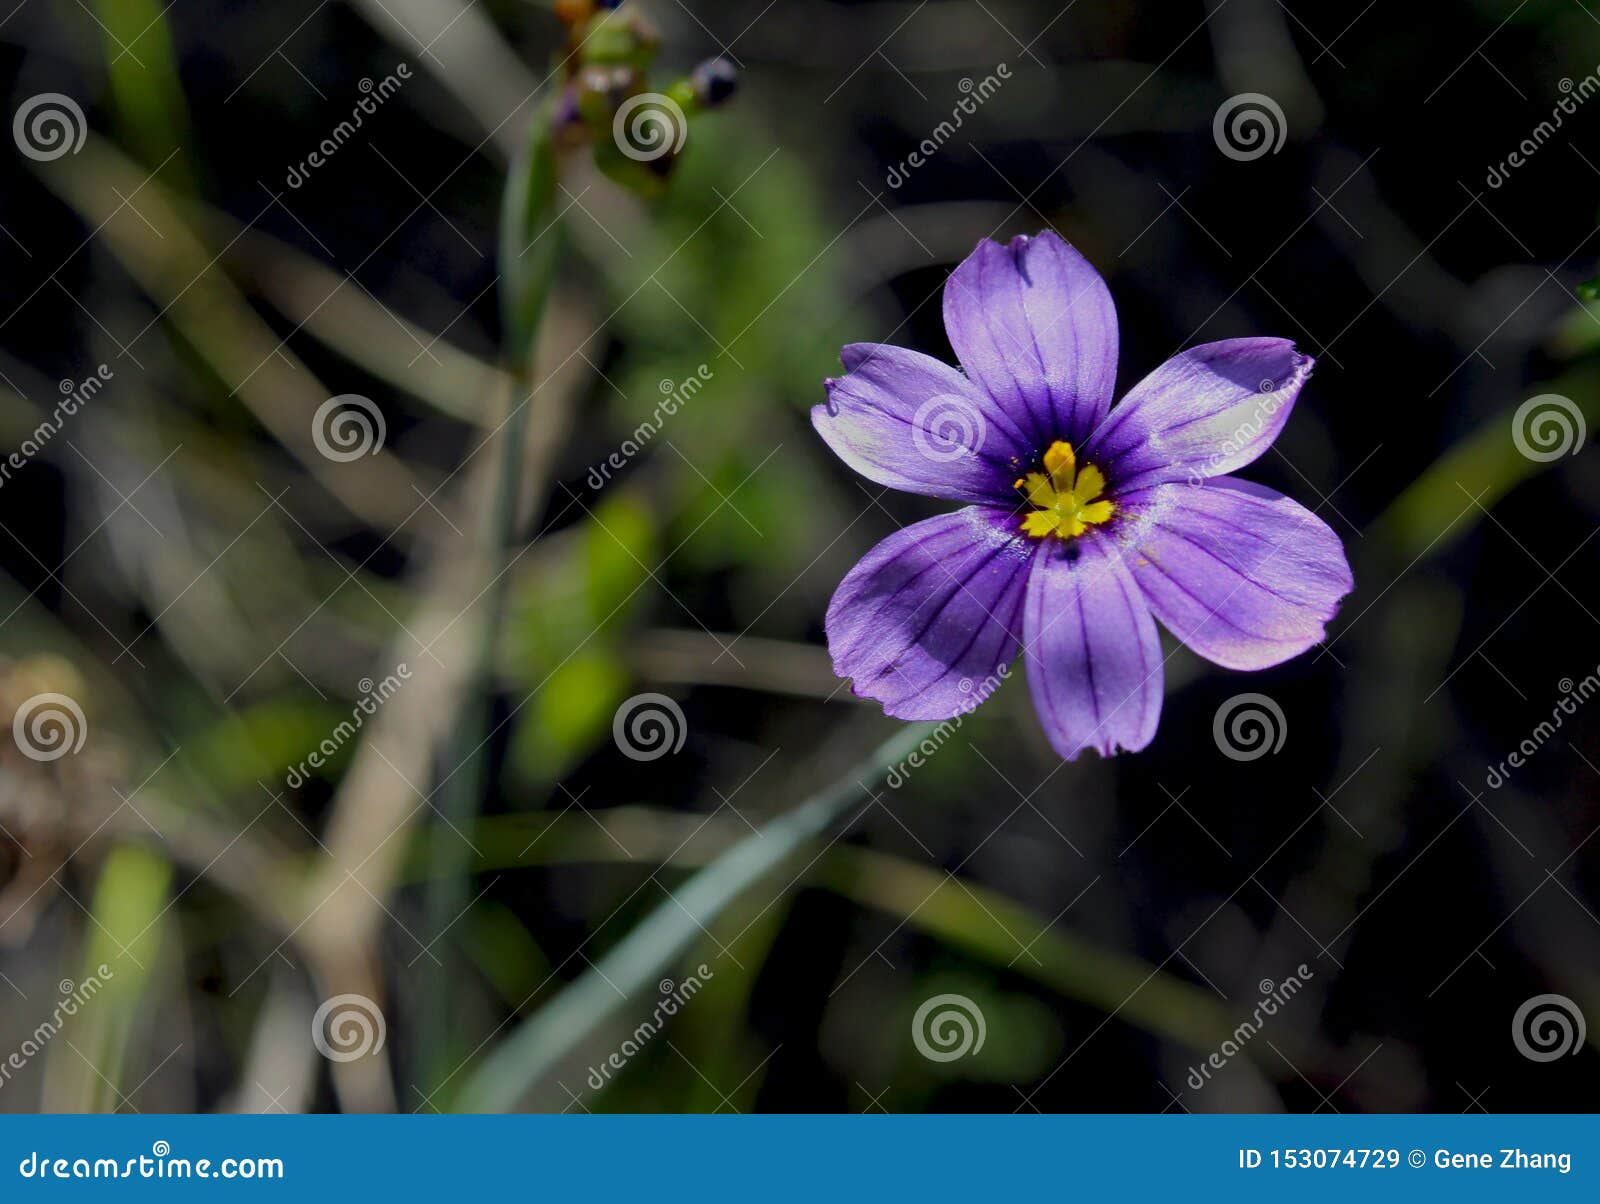 blue flower of lucerne blue-eyed grass